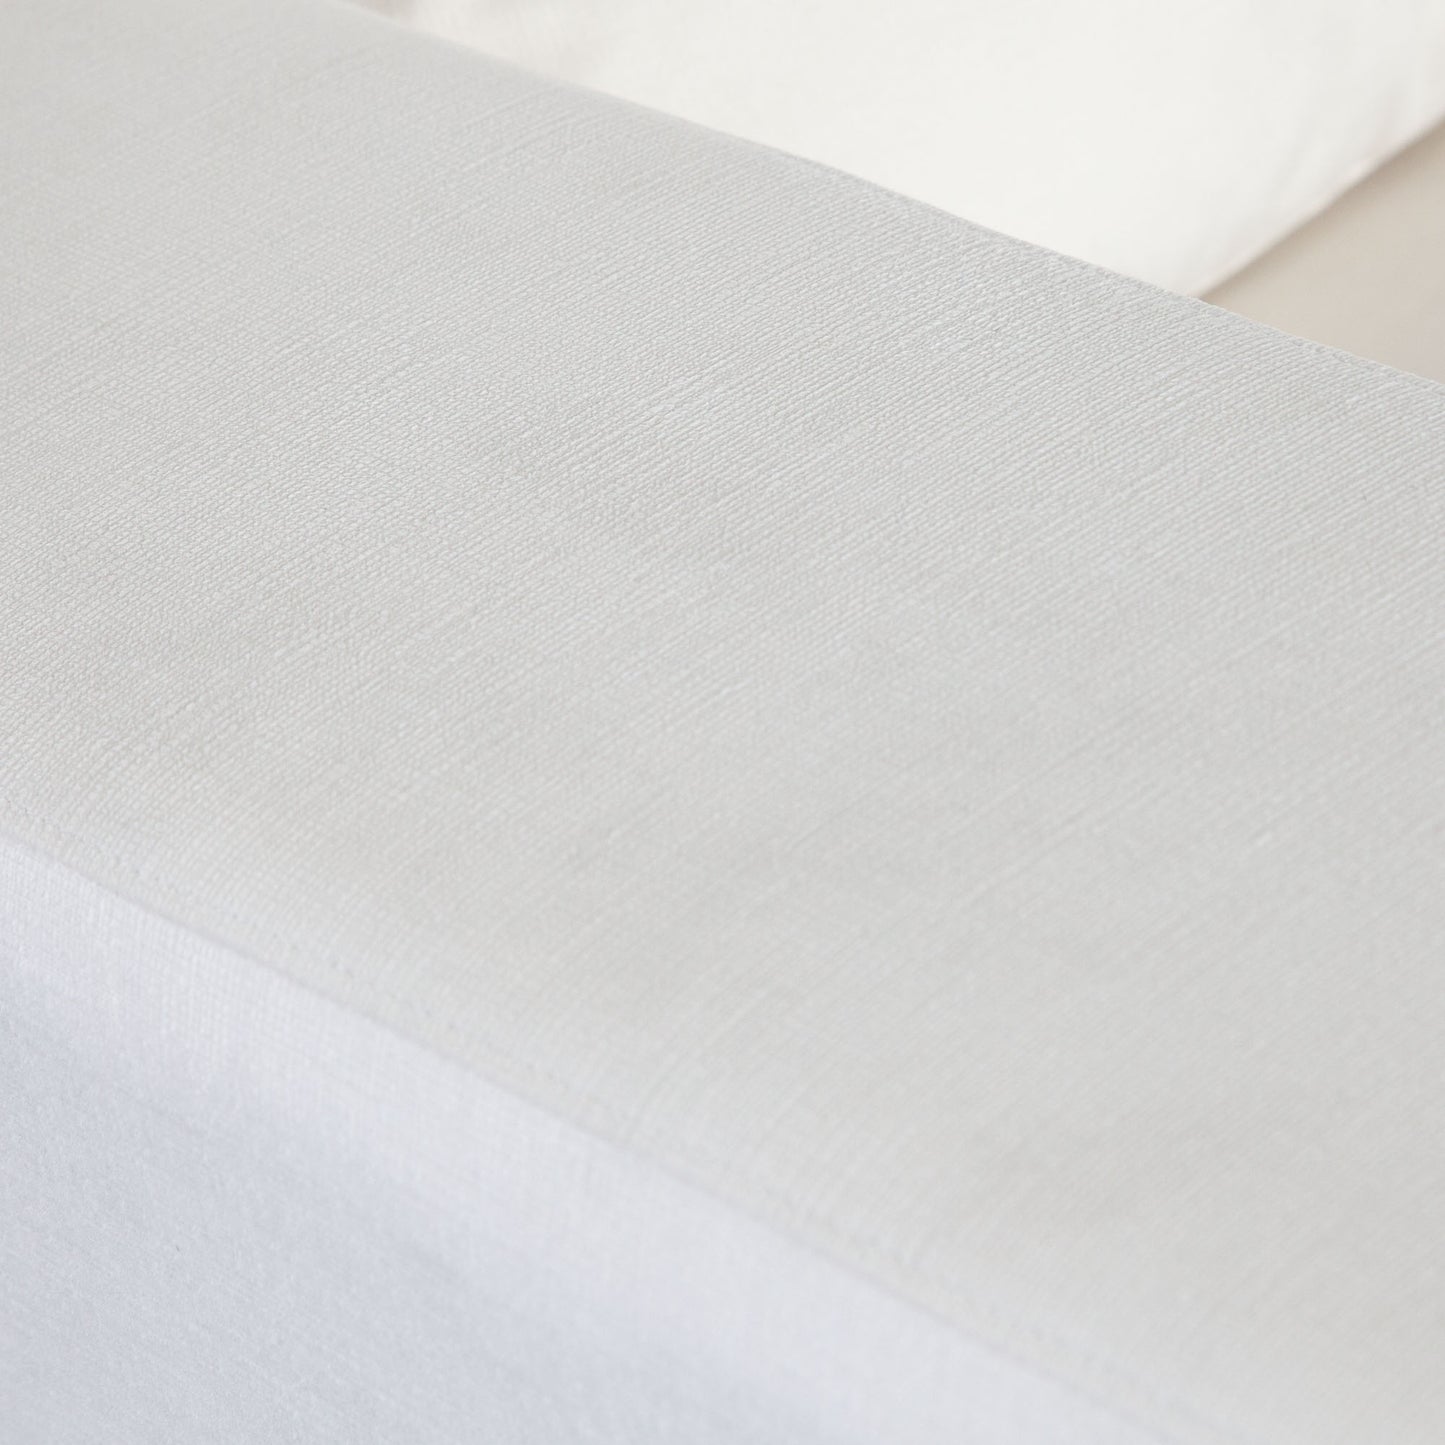 Muse Sofa White Fabric